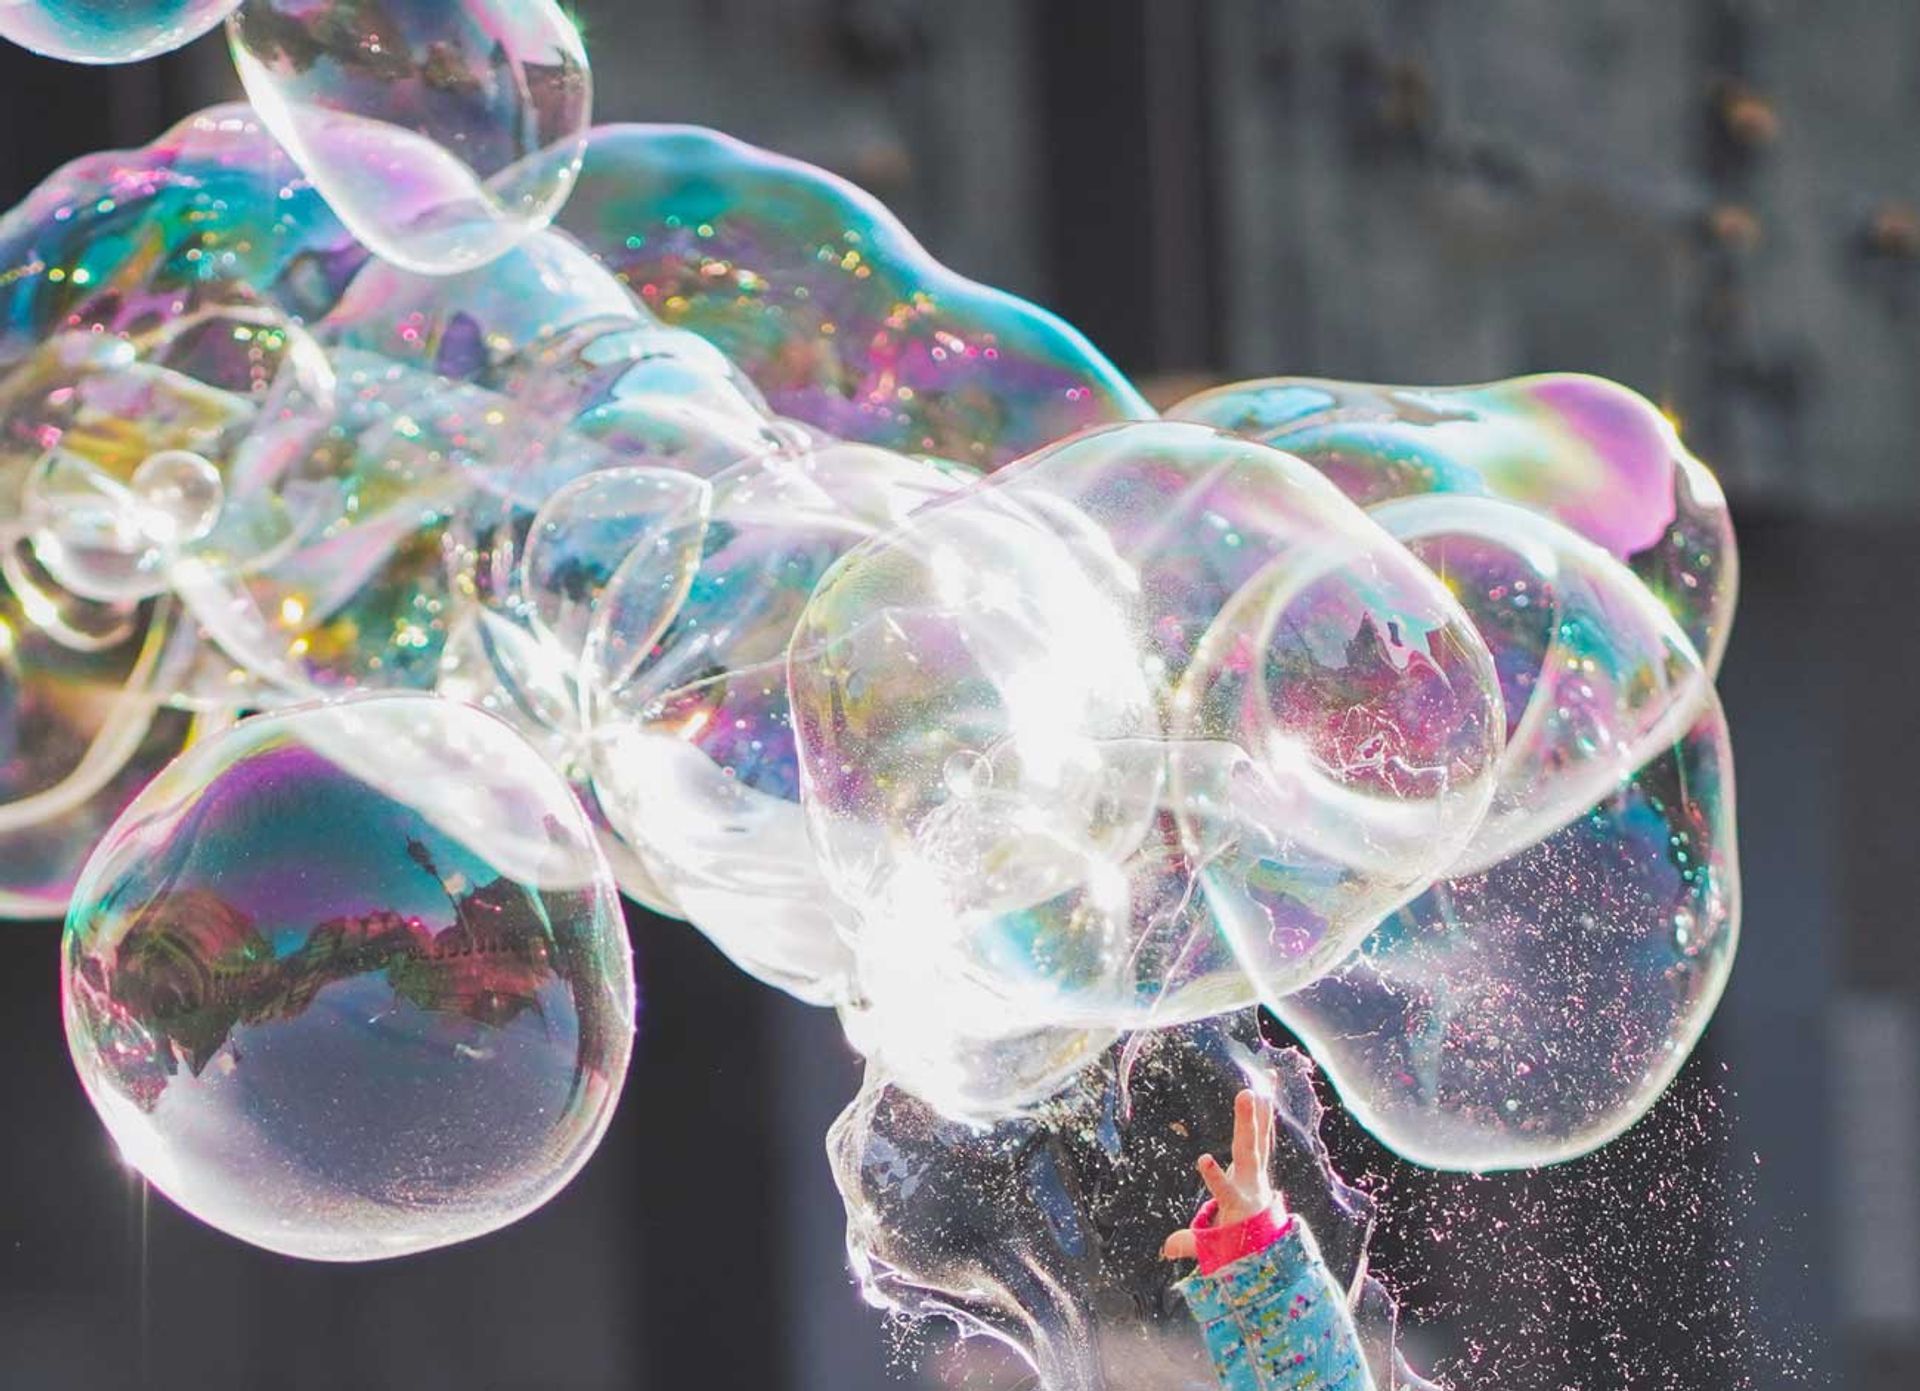 All bubbles eventually burst Alexander Dummer